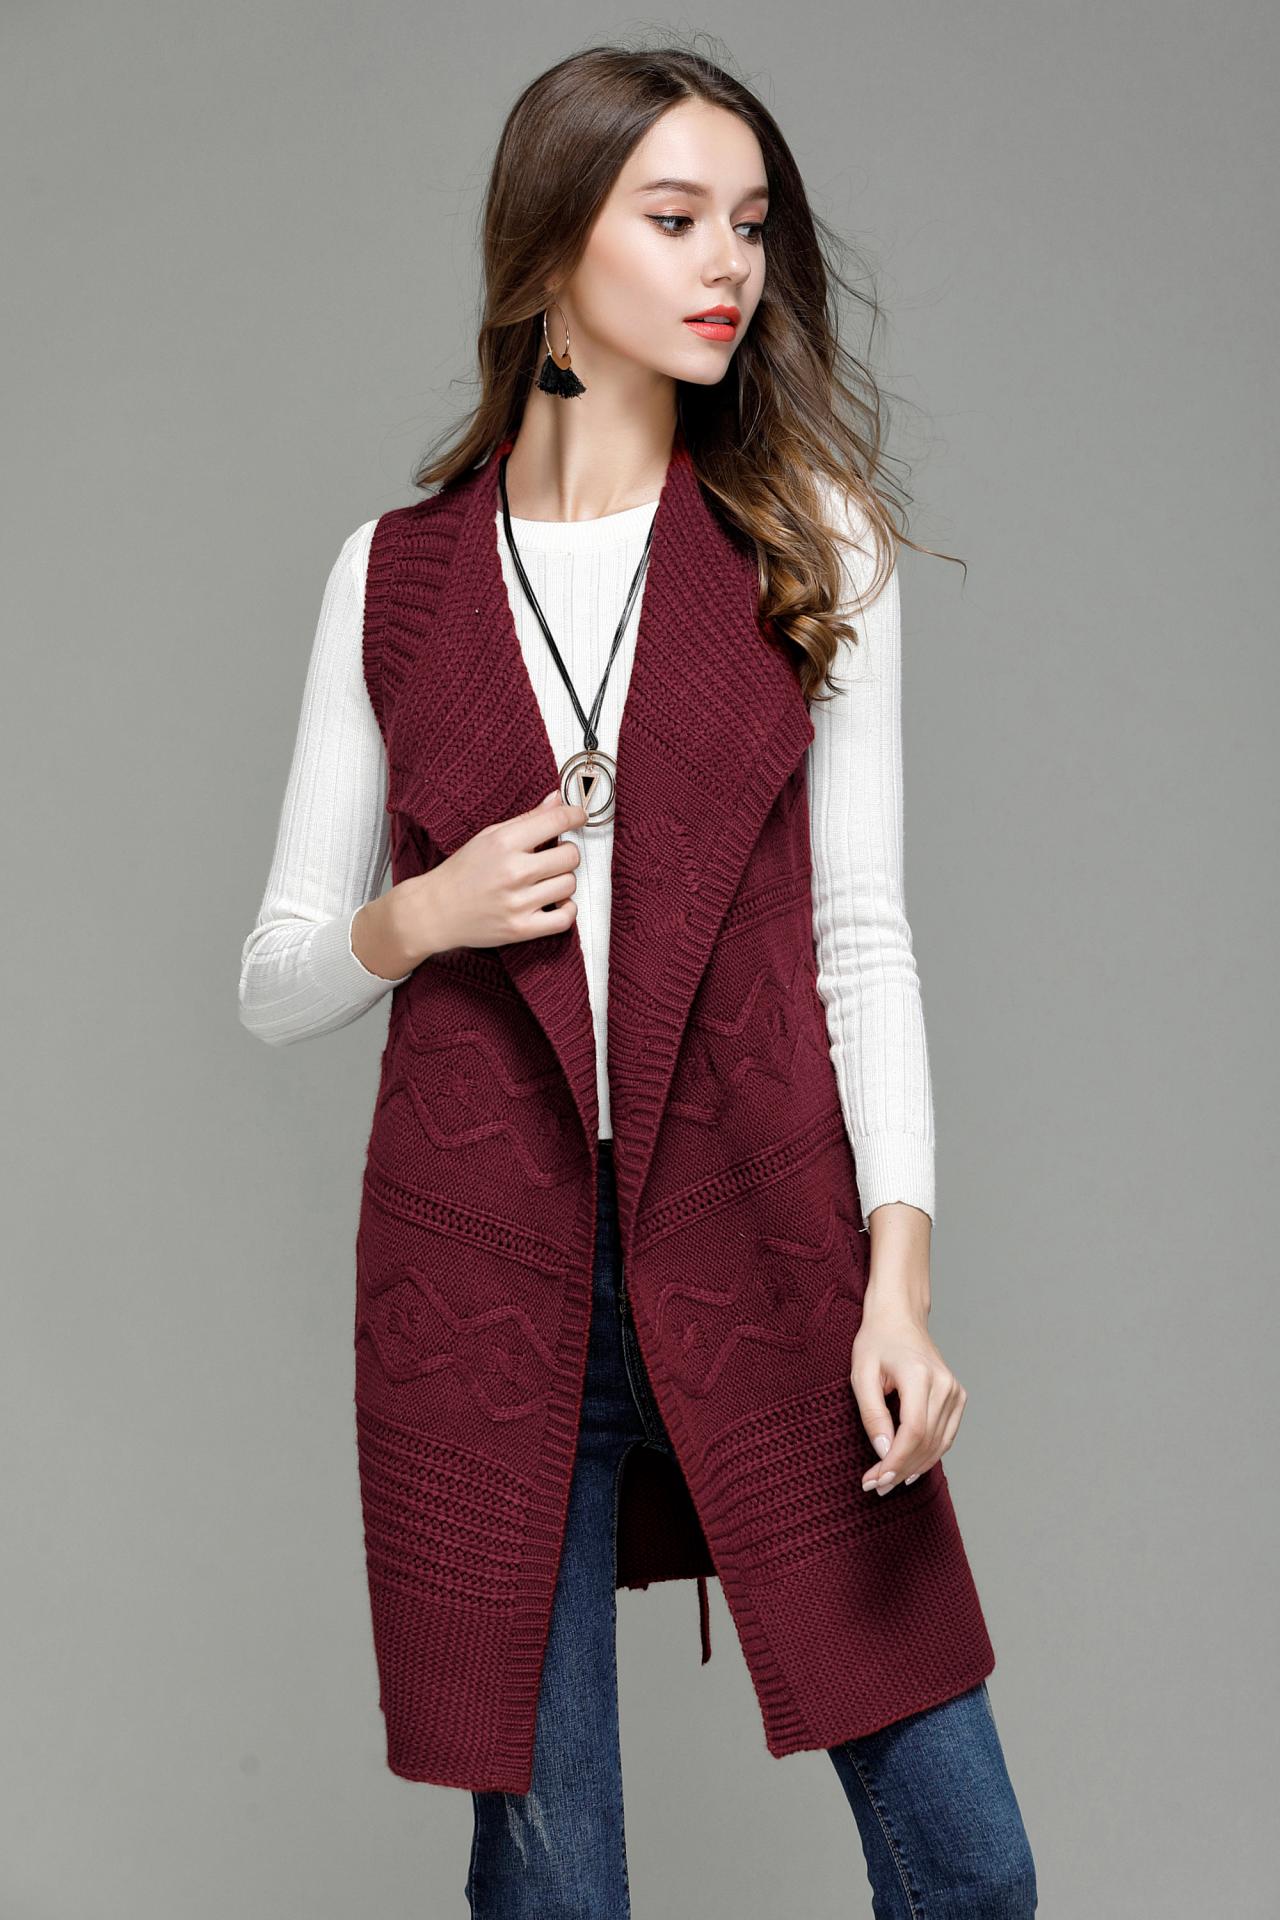 Fashion Long Knit Vest Cardigan - Wine Red